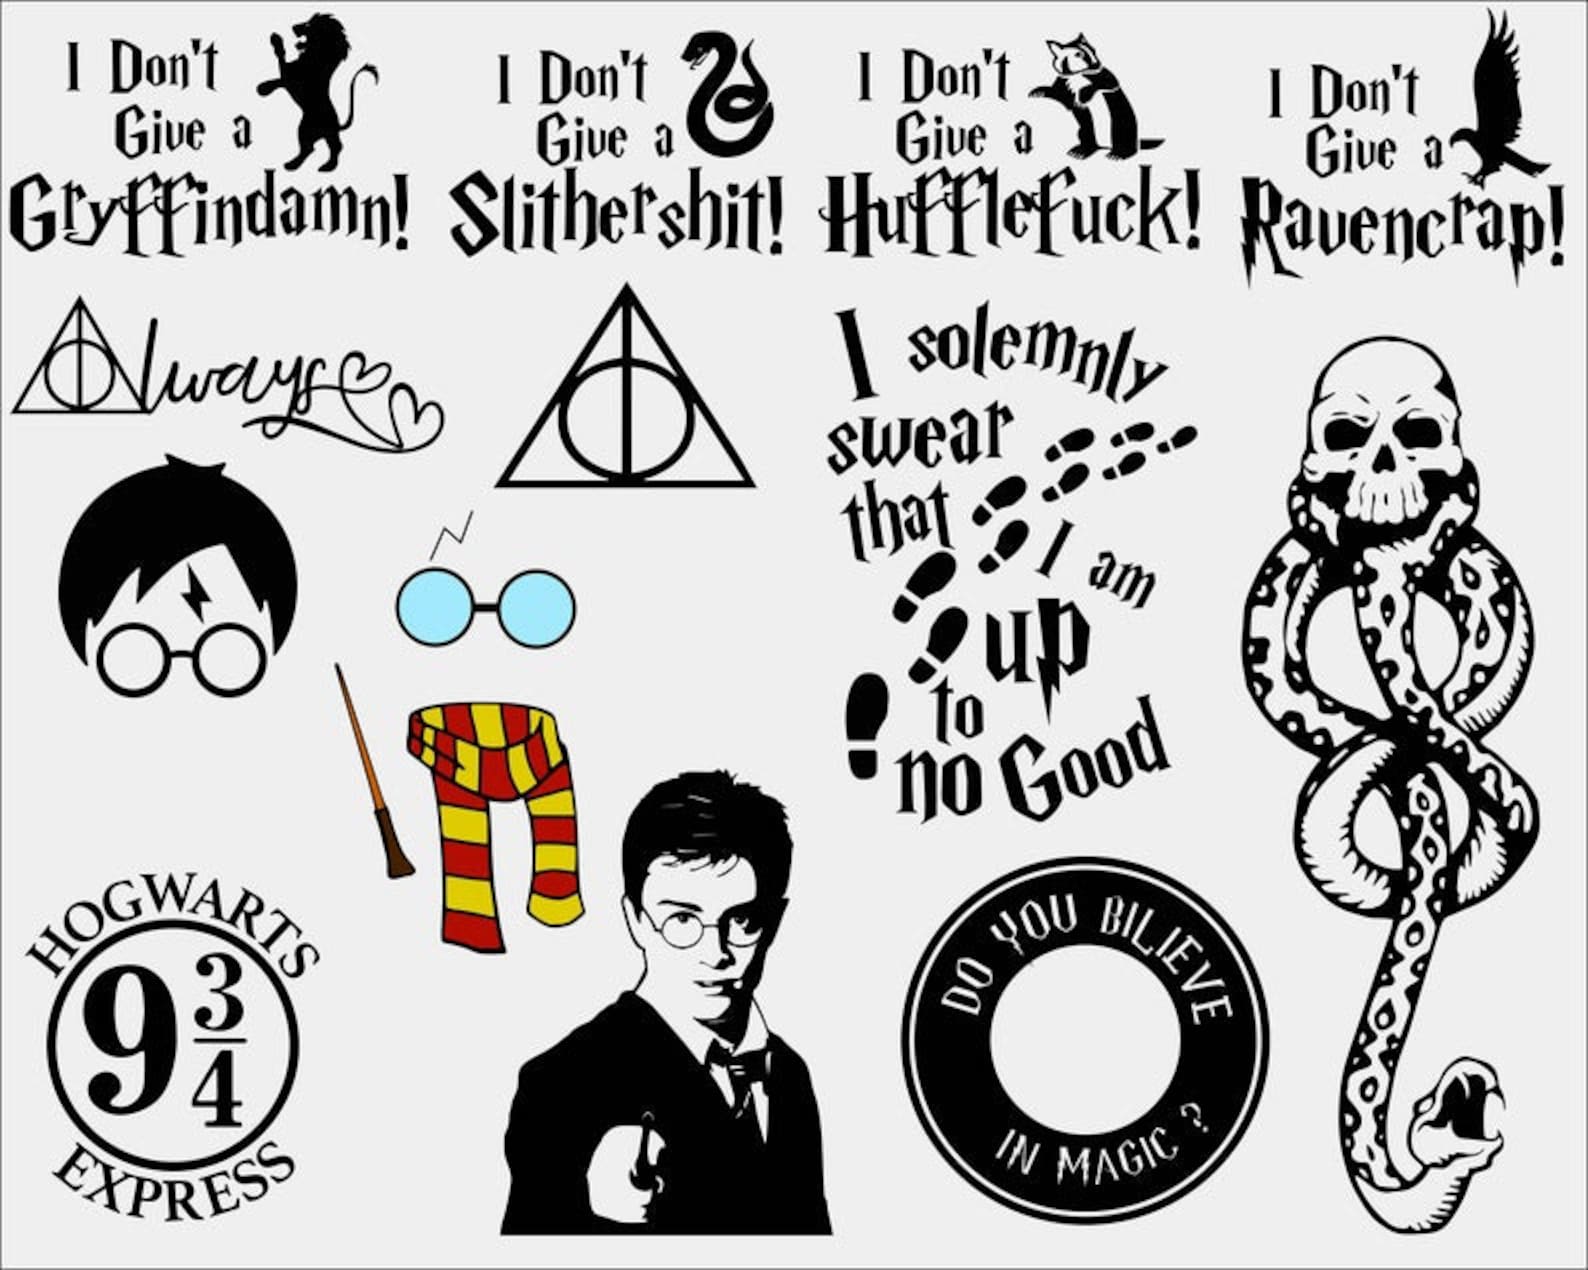 60 Harry Potter svg bundle Wizard Svg Bundle Hogwarts | Etsy